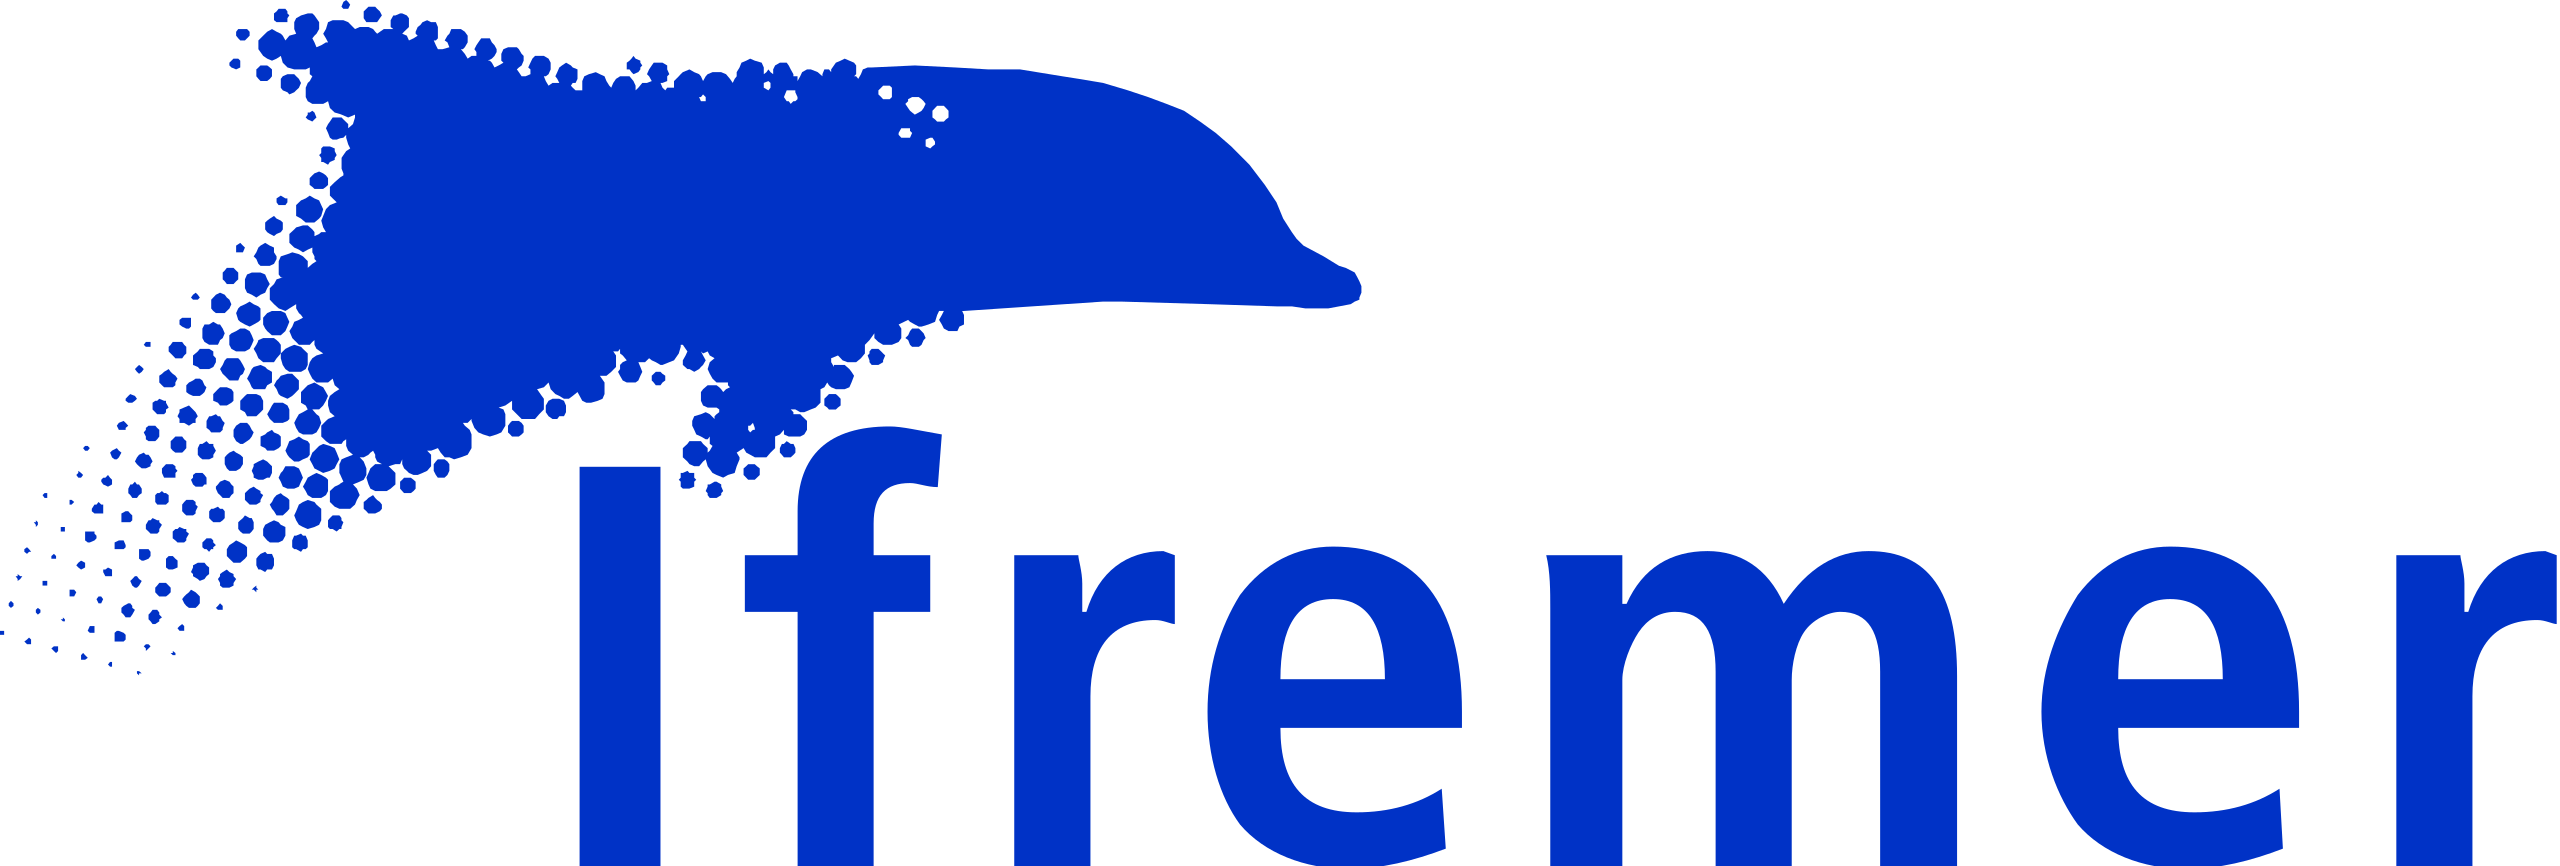 Logo Ifremer 